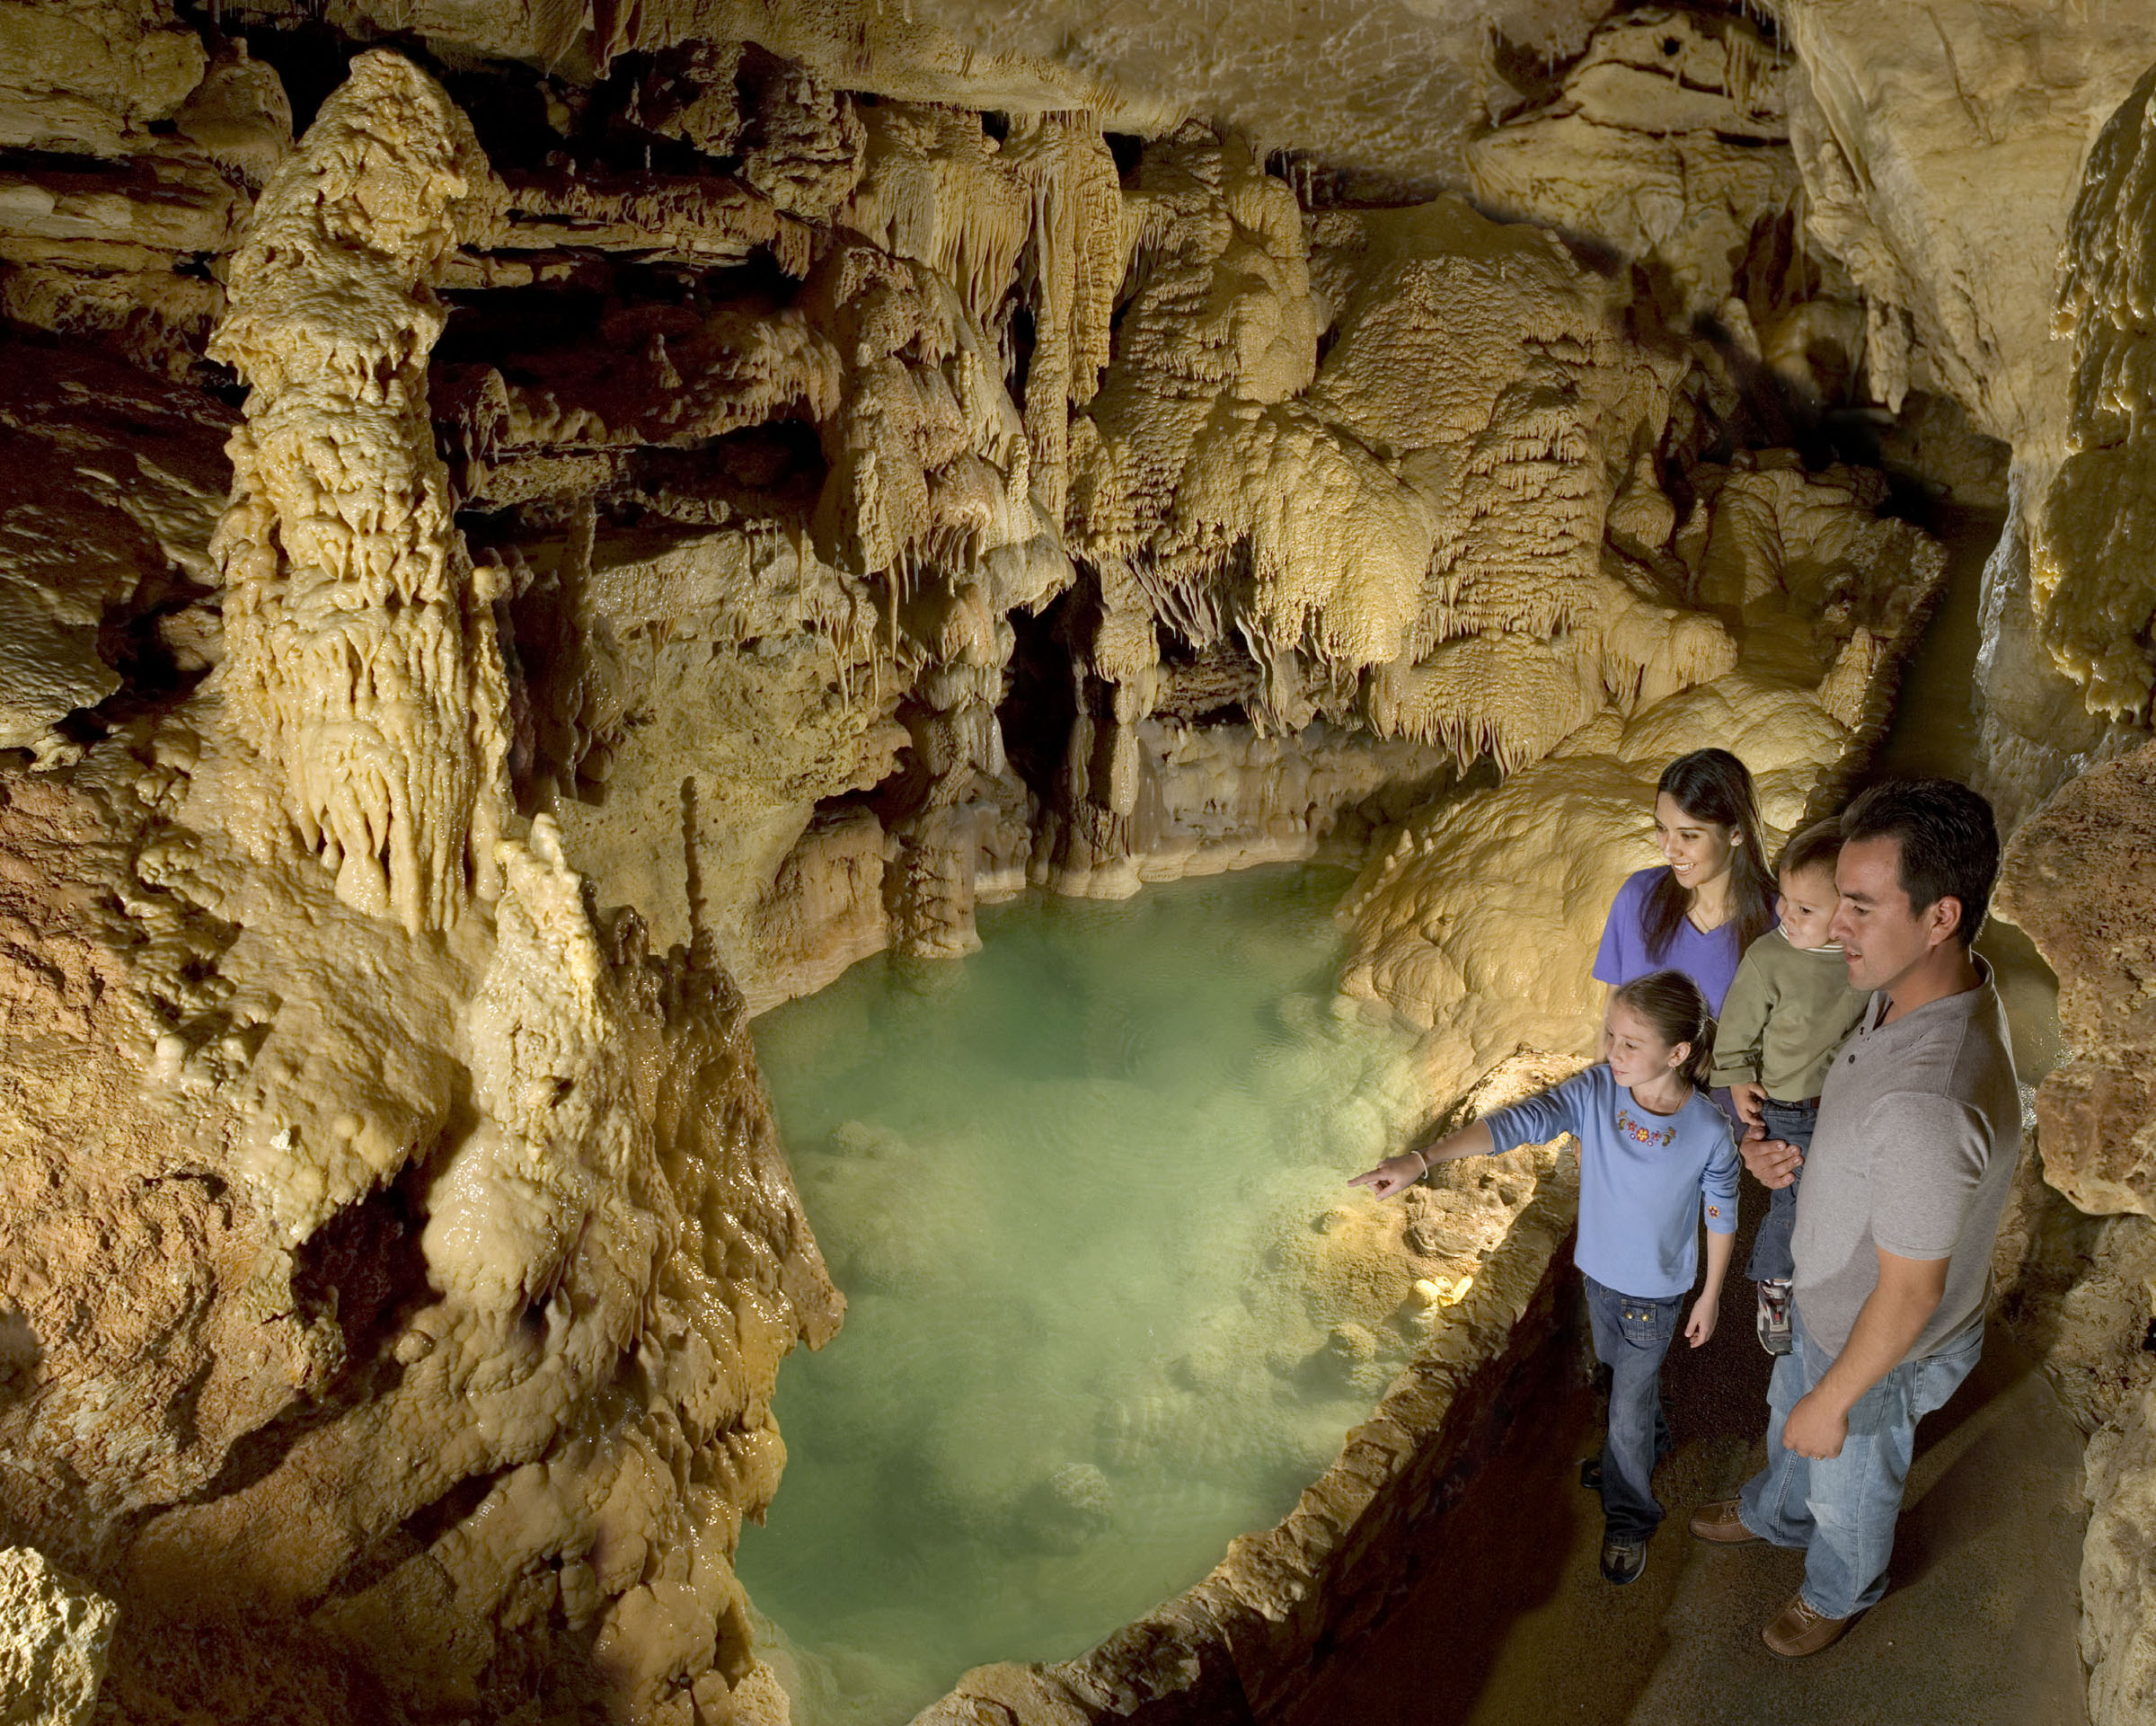 Visitors enjoying the Emerald Lake formation in Natural Bridge Caves